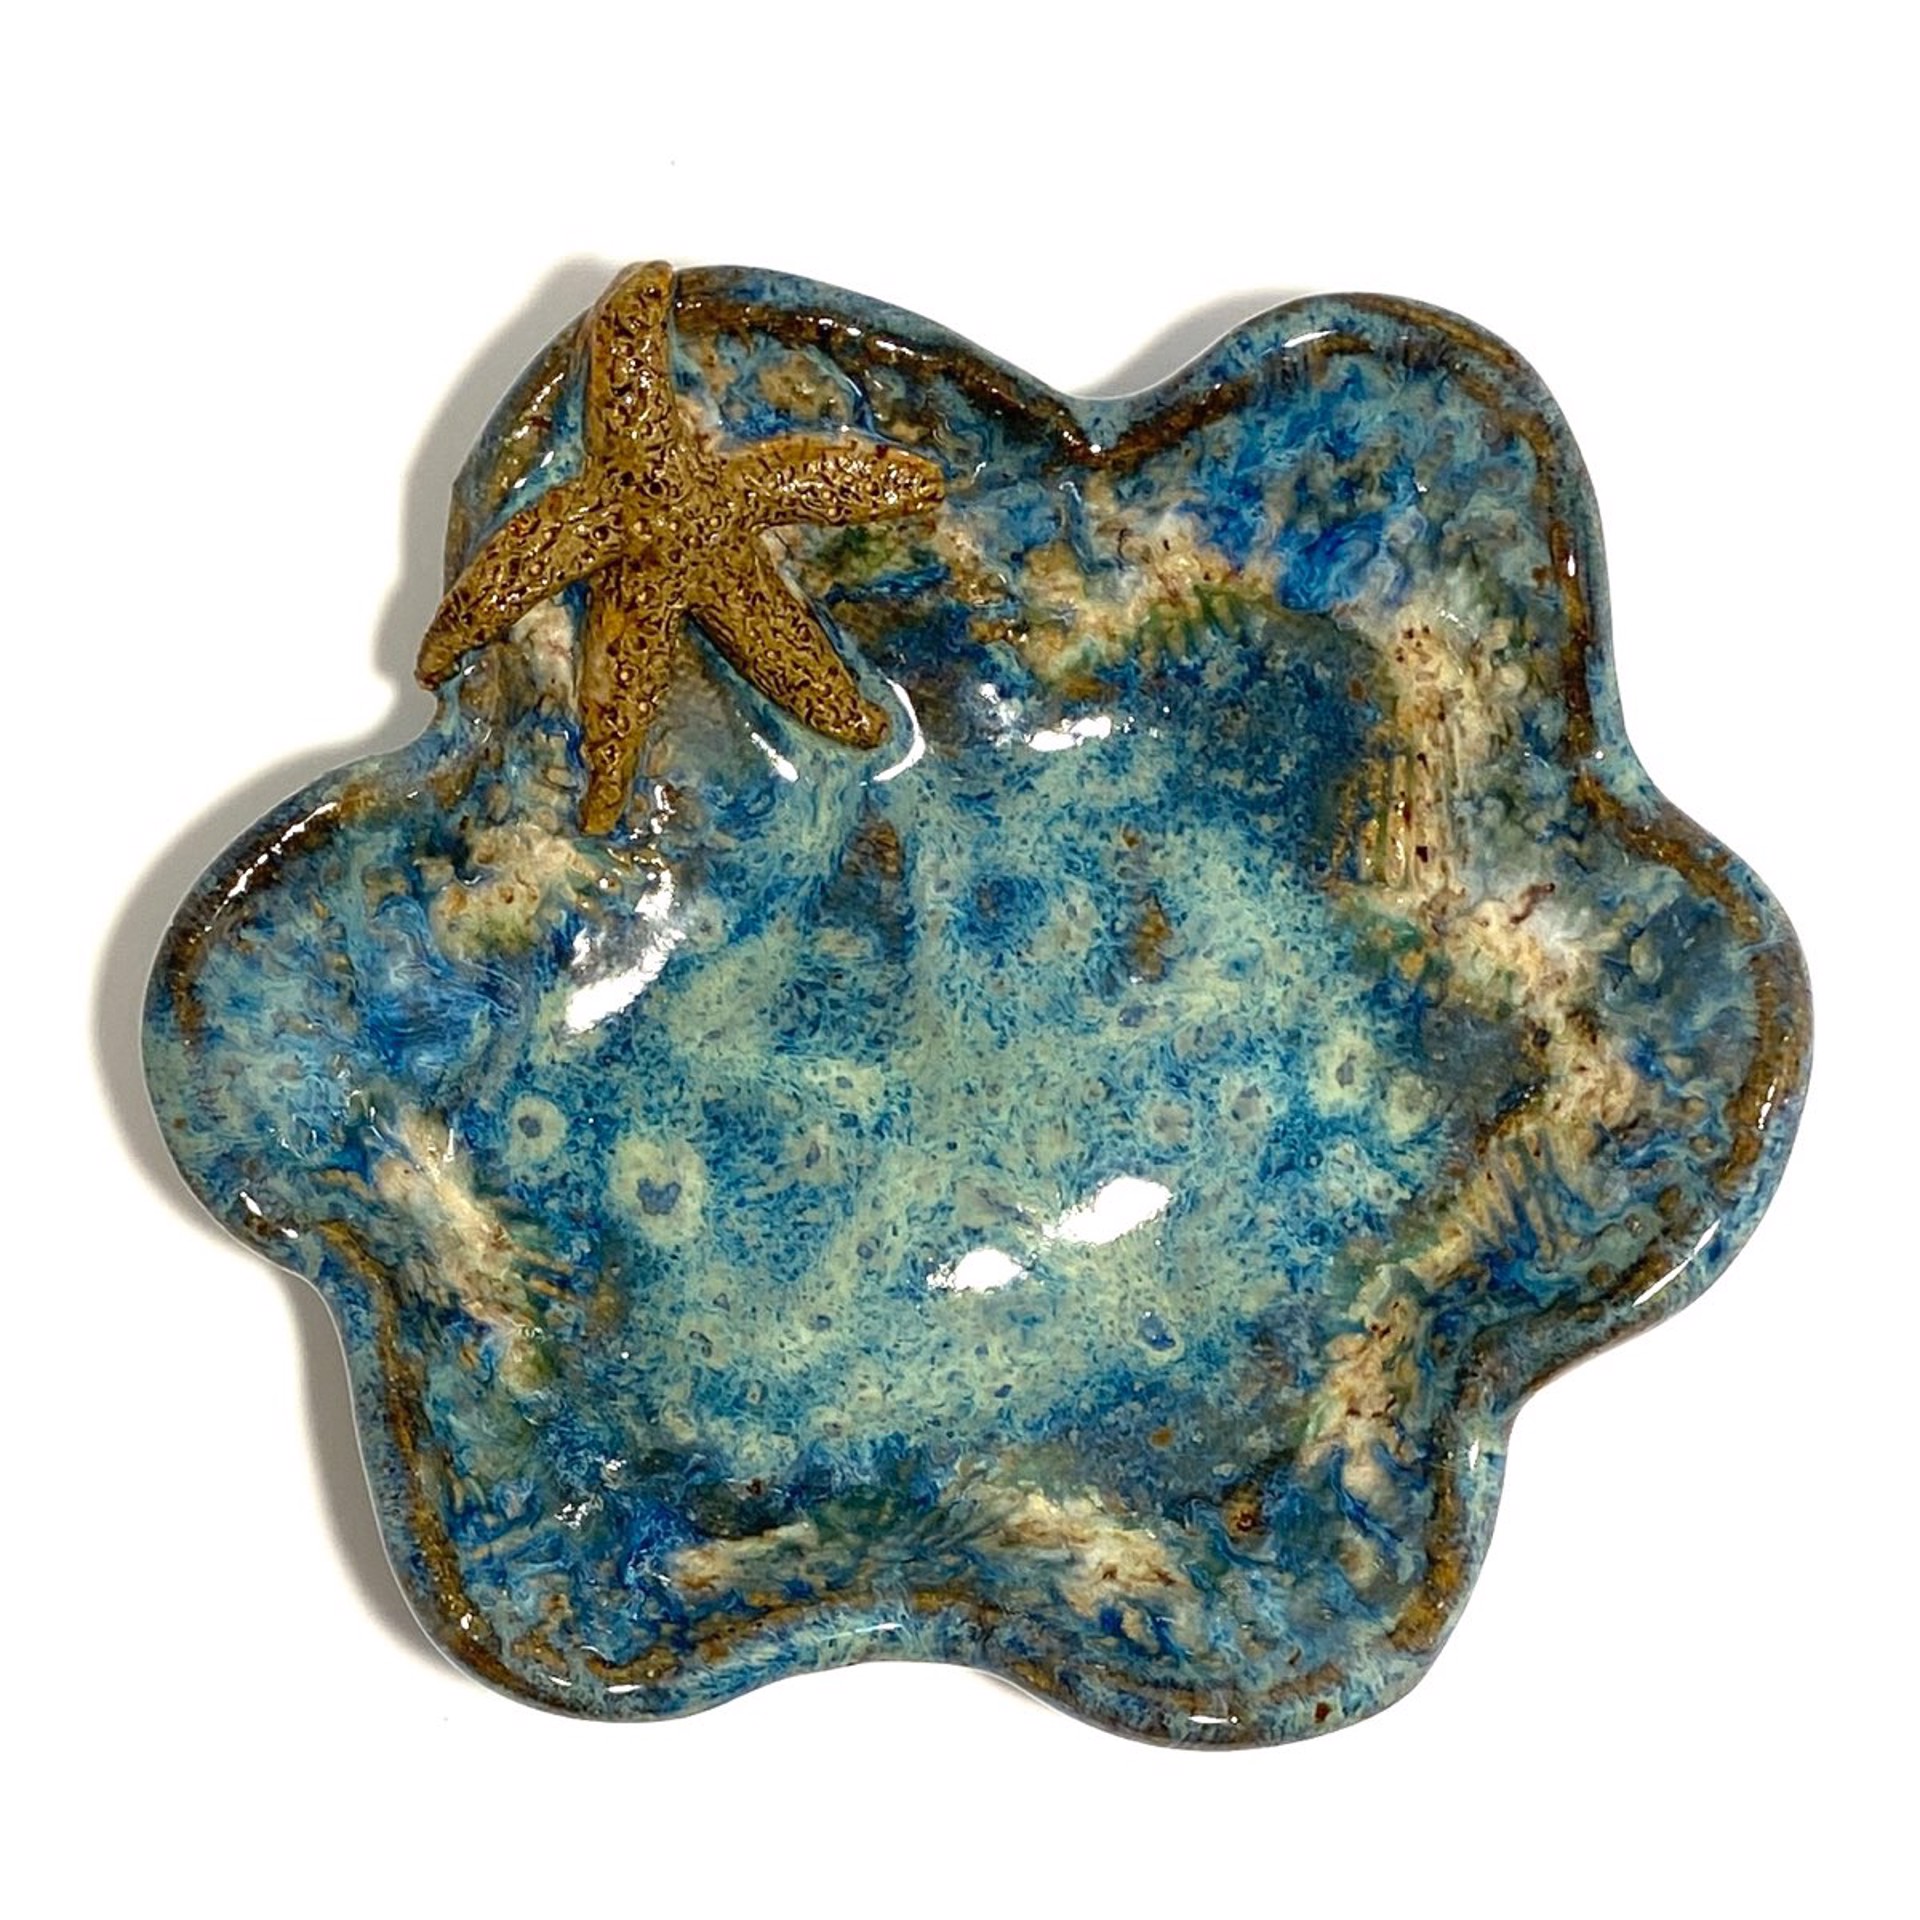 Small Pool Dish with Starfish (Blue Glaze) LG23-1127 by Jim & Steffi Logan